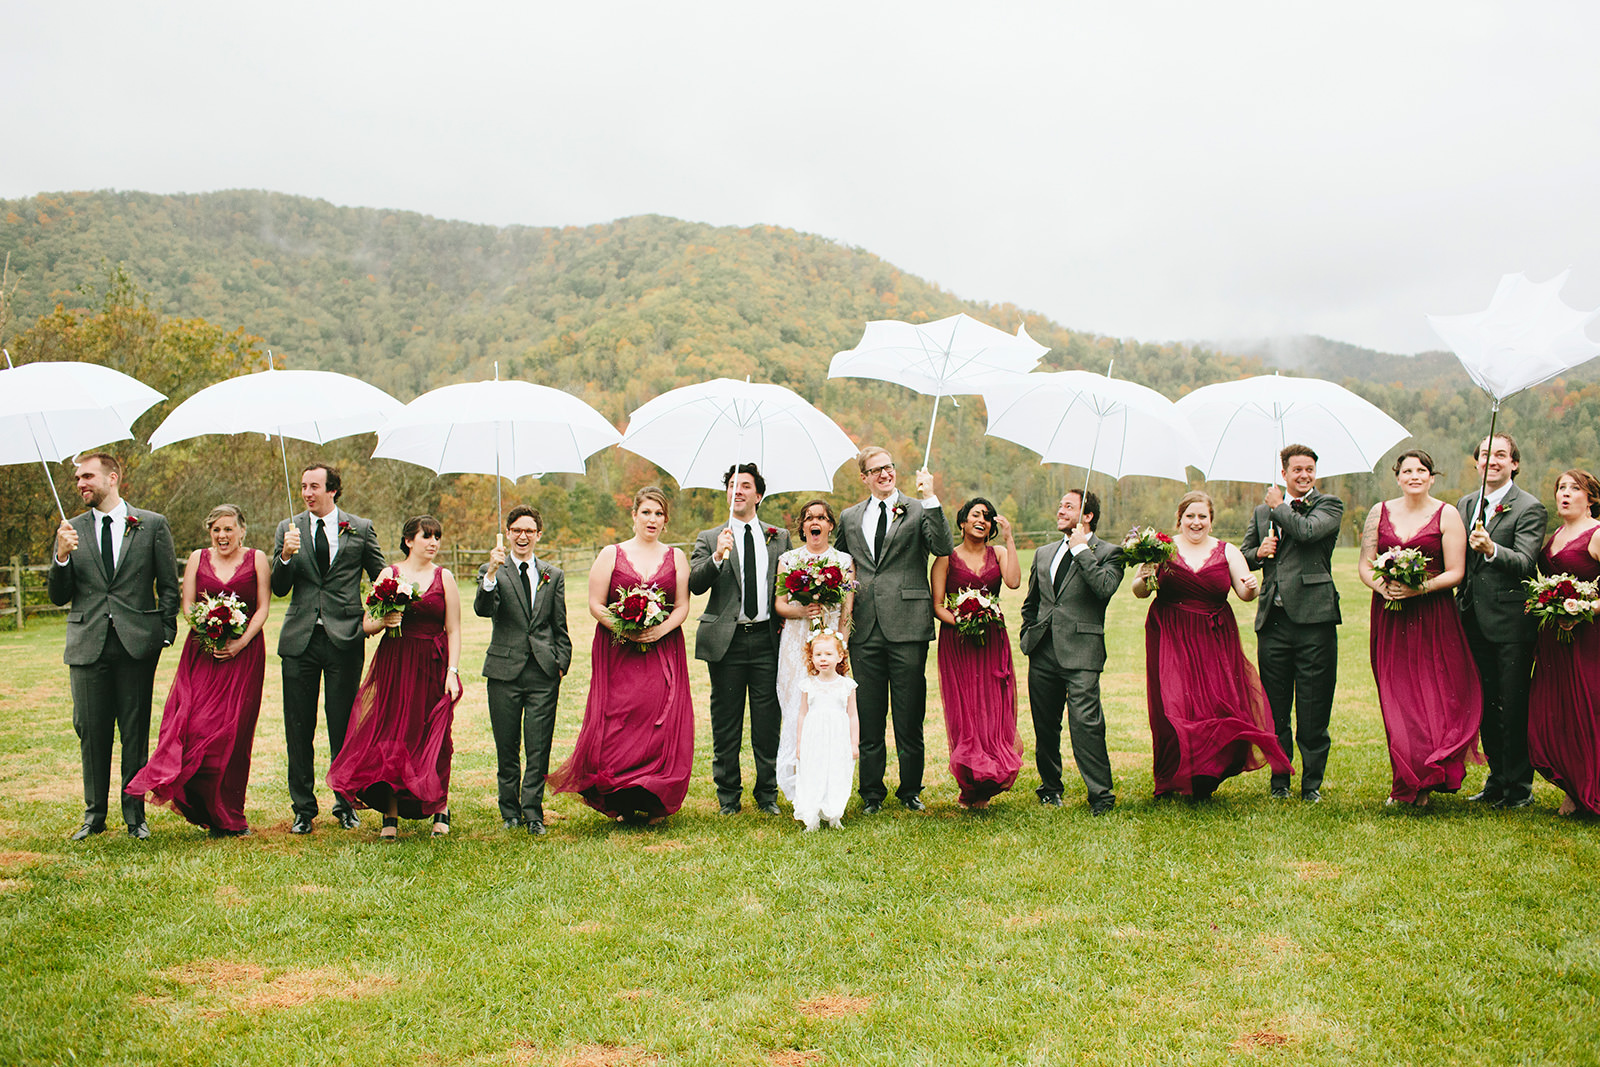 rainy bridal party photos